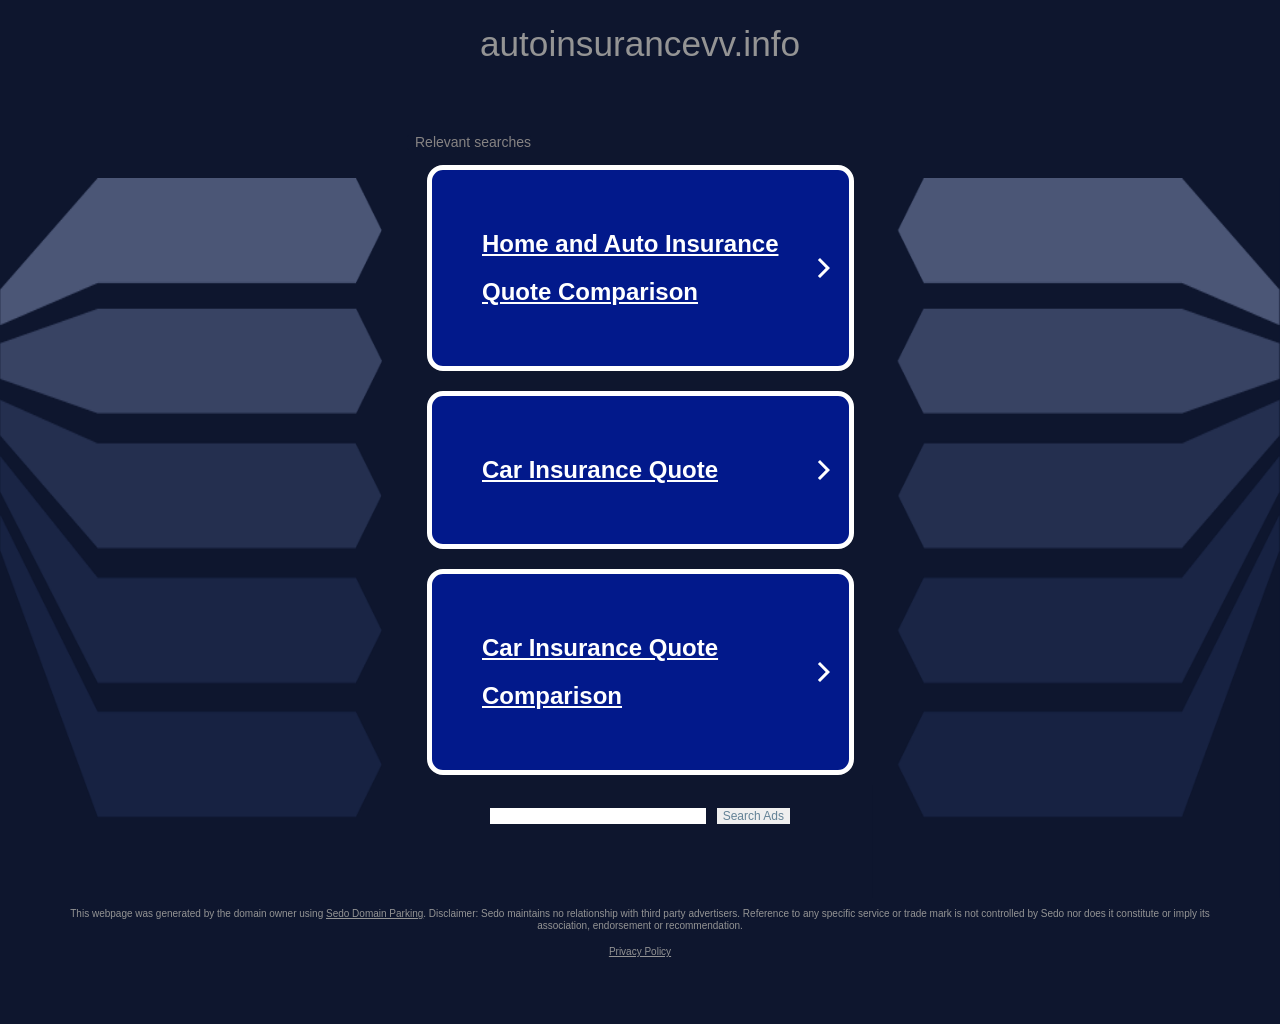 autoinsurancevv.info